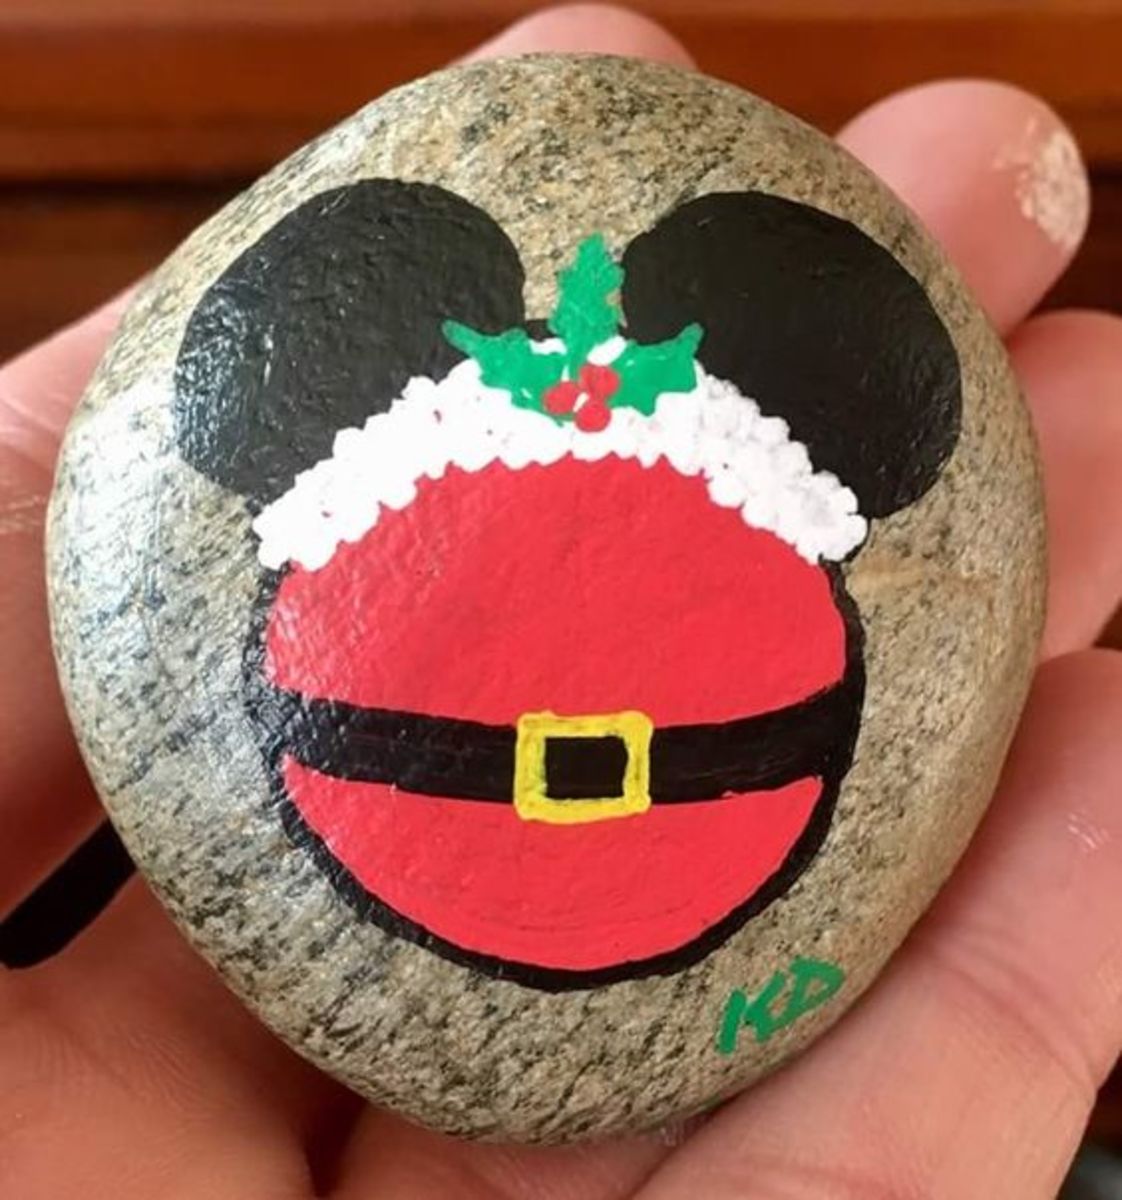 christmas-painted-rocks